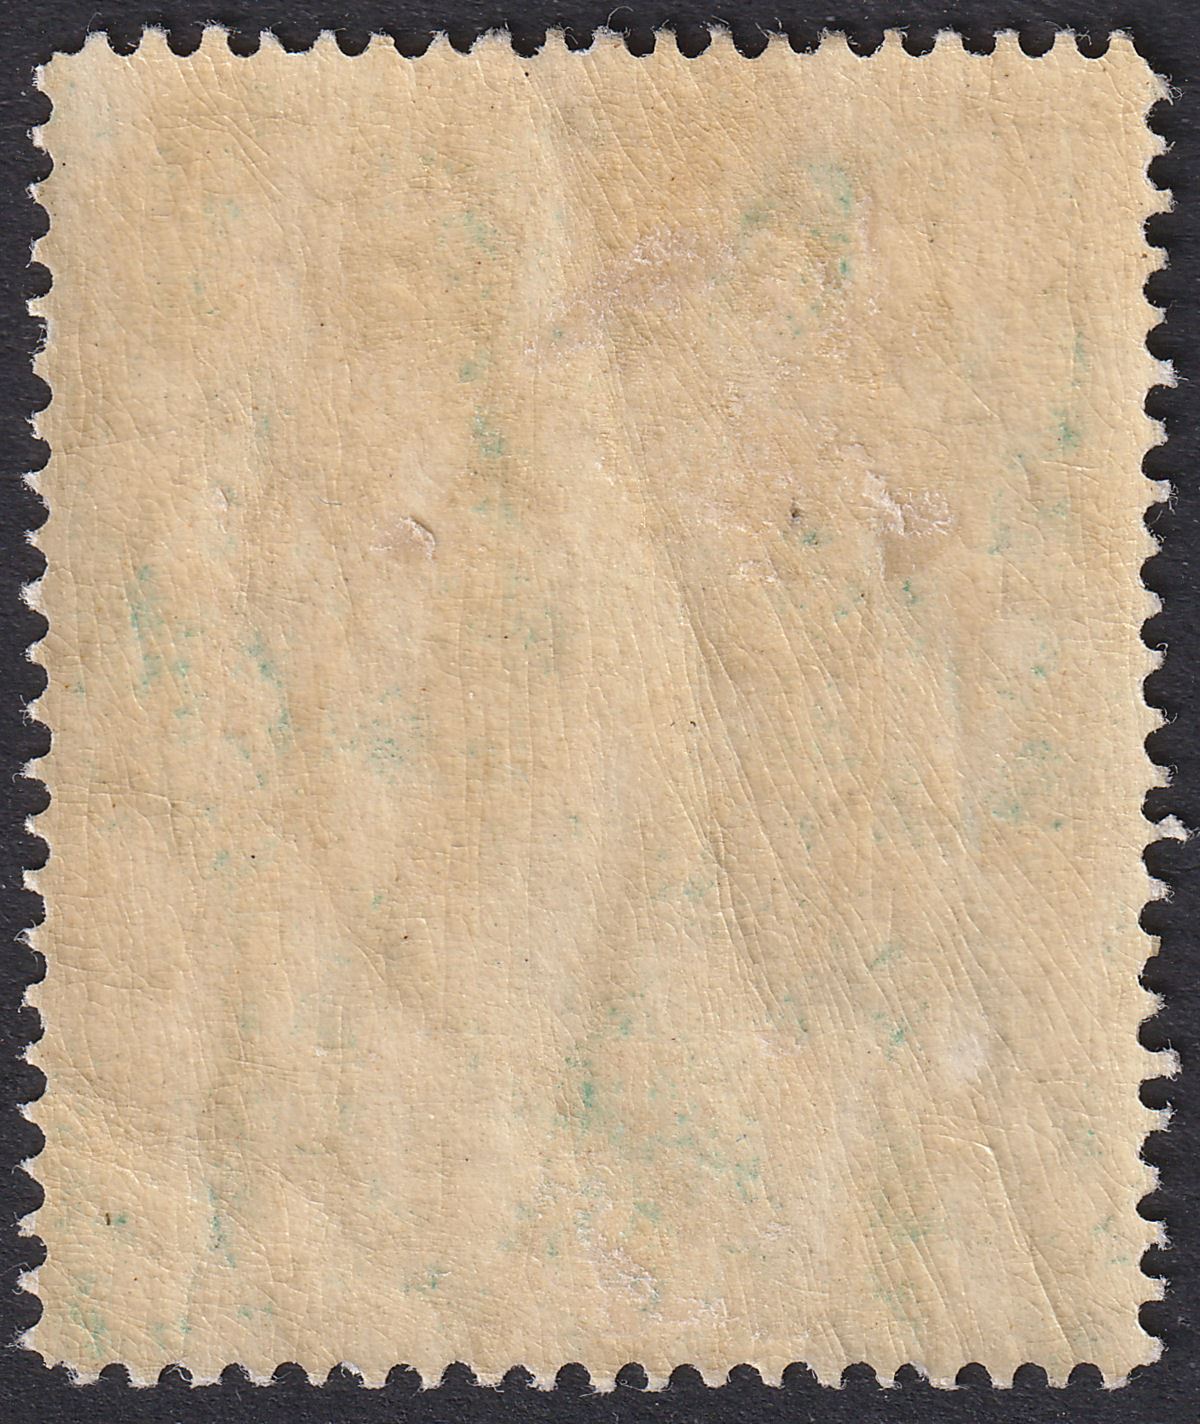 Falkland Islands 1912 KGV 3sh Slate-Green Mint SG66 cat £100